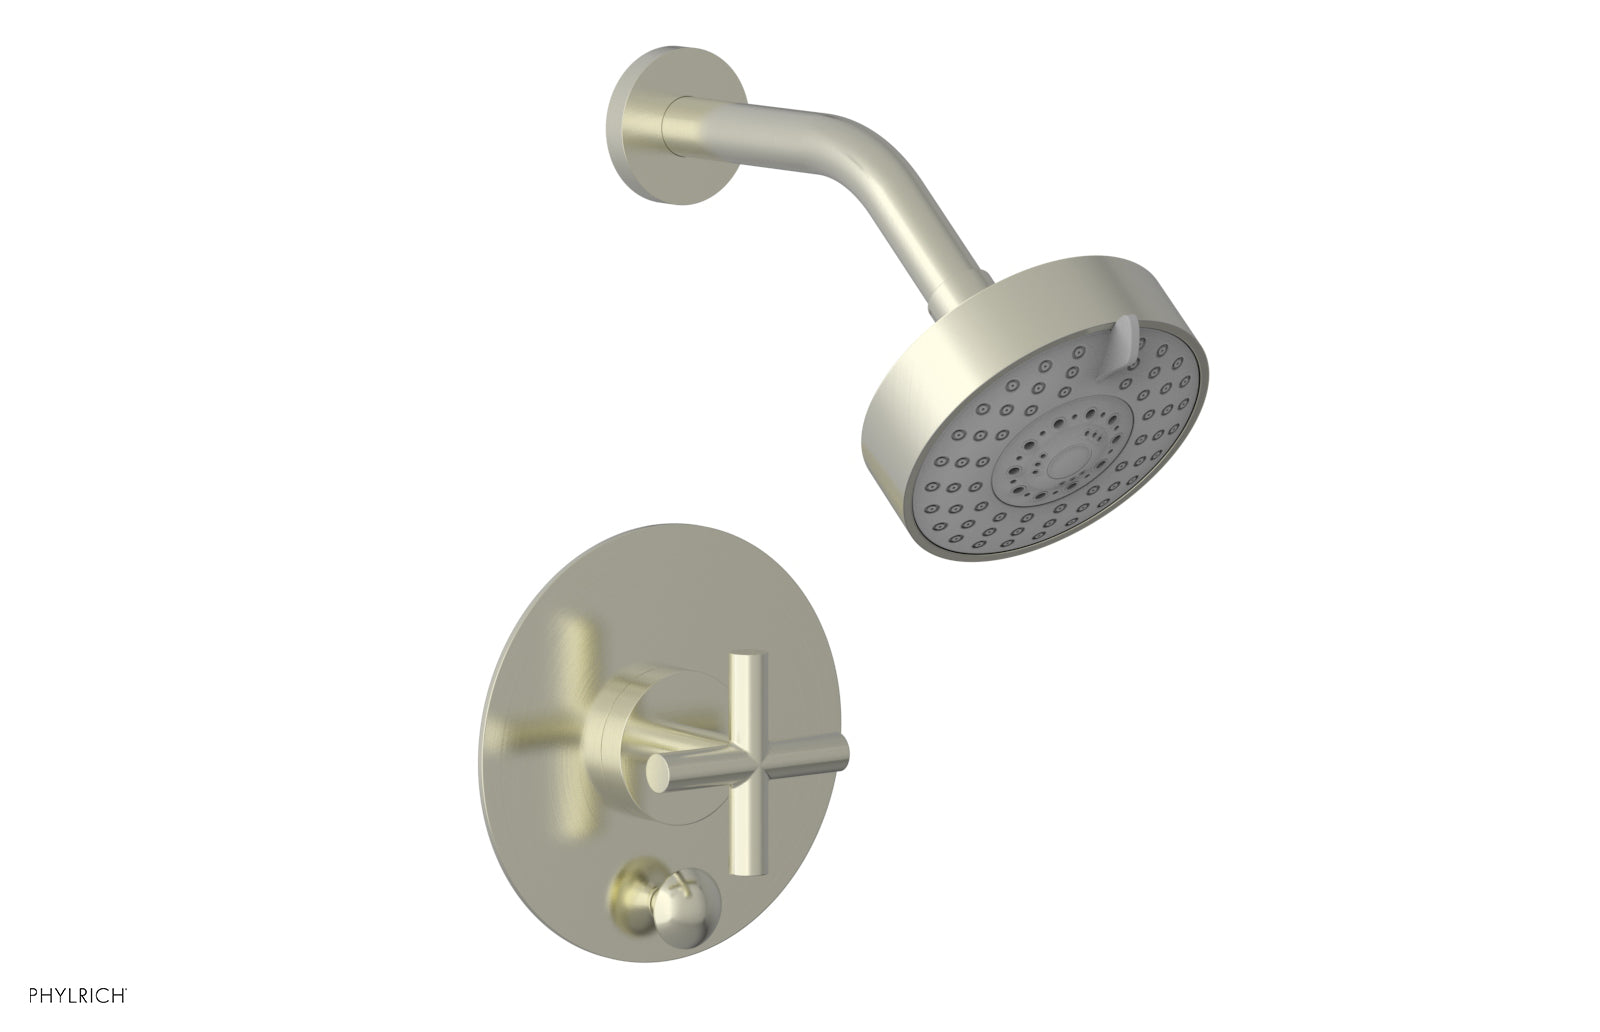 Phylrich TRANSITION Pressure Balance Shower and Diverter Set (Less Spout), Cross Handle